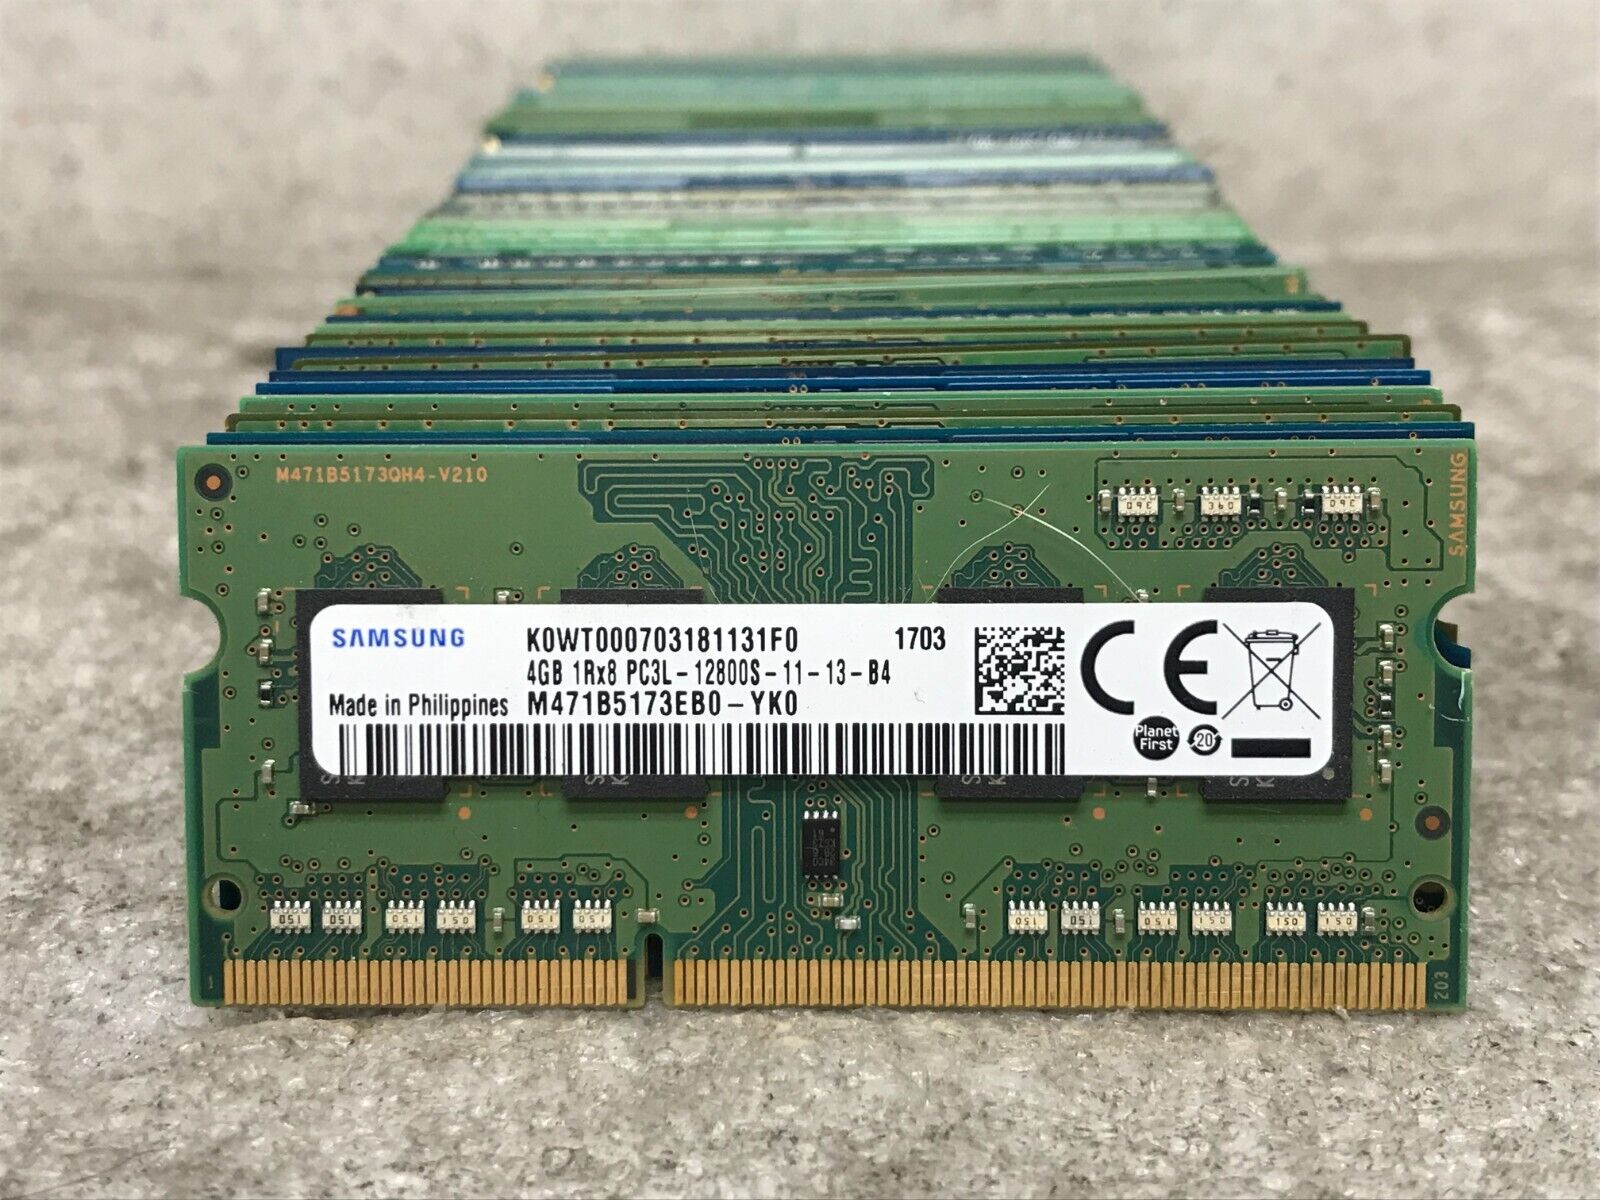 Lot of 50 / DDR3 PC3 / 4GB / Laptop Memory RAM Mix /